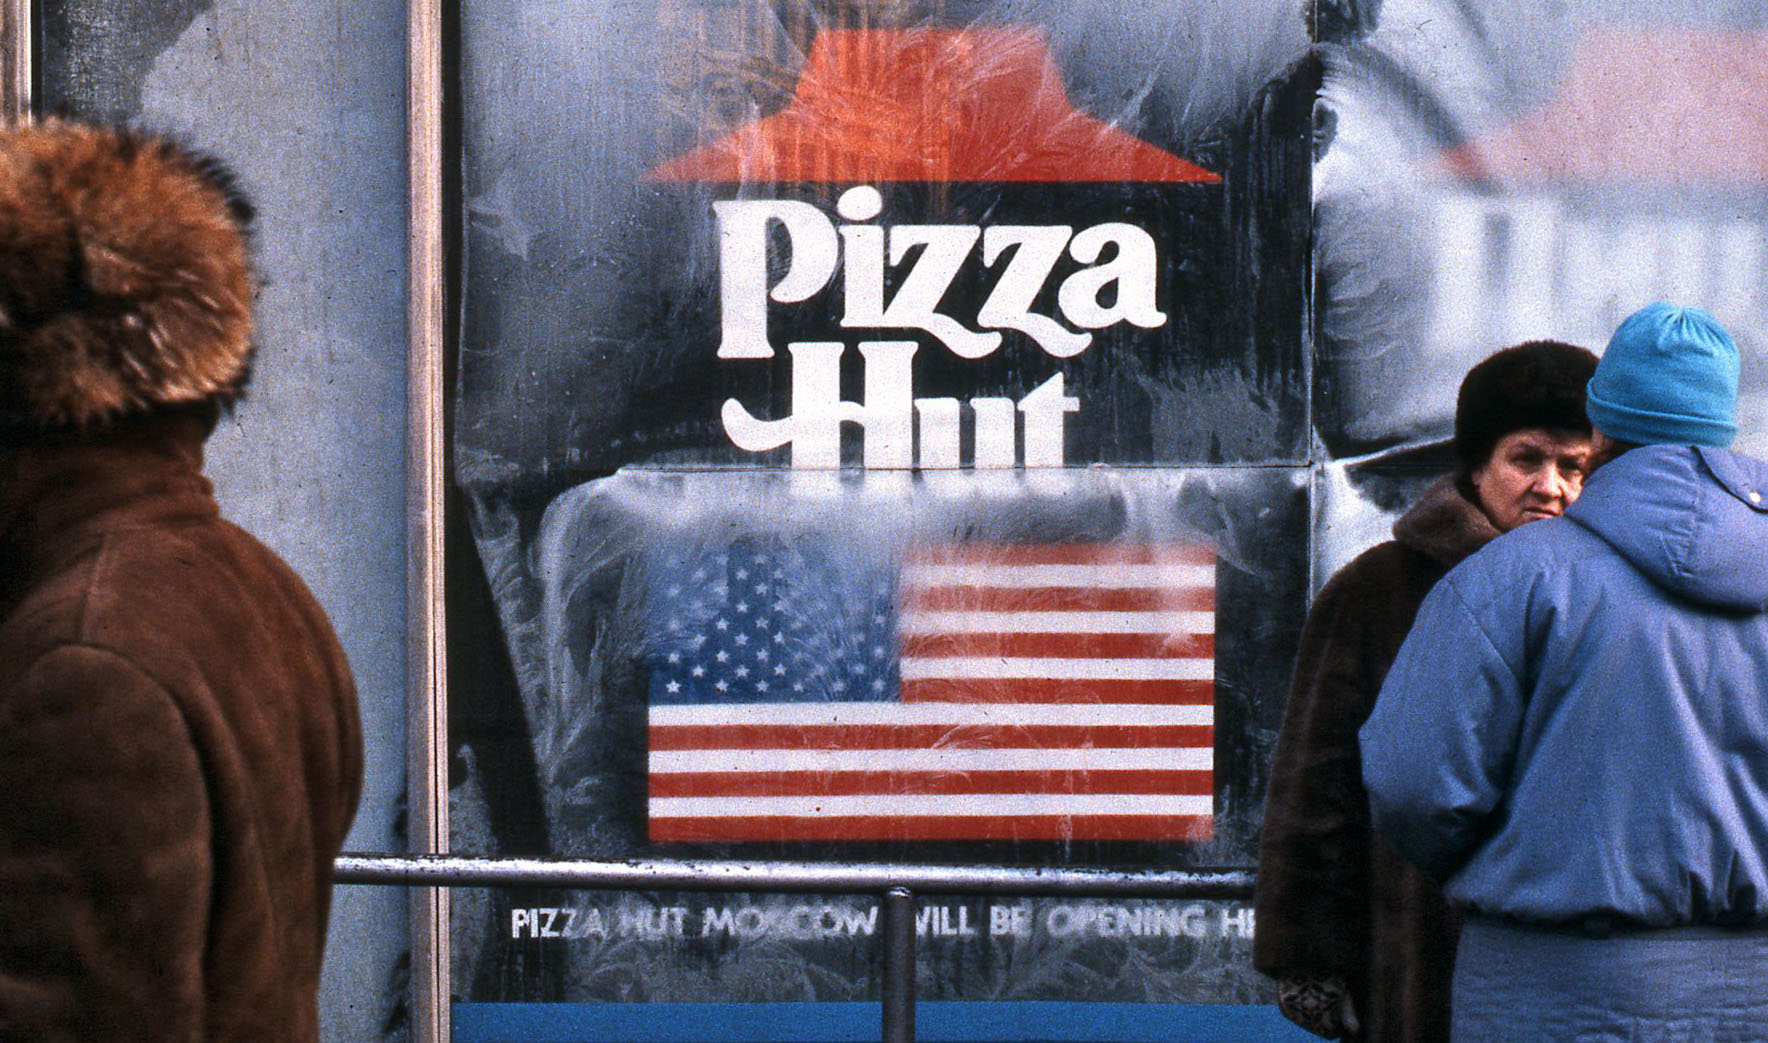 Pizza Hut Movie projector box